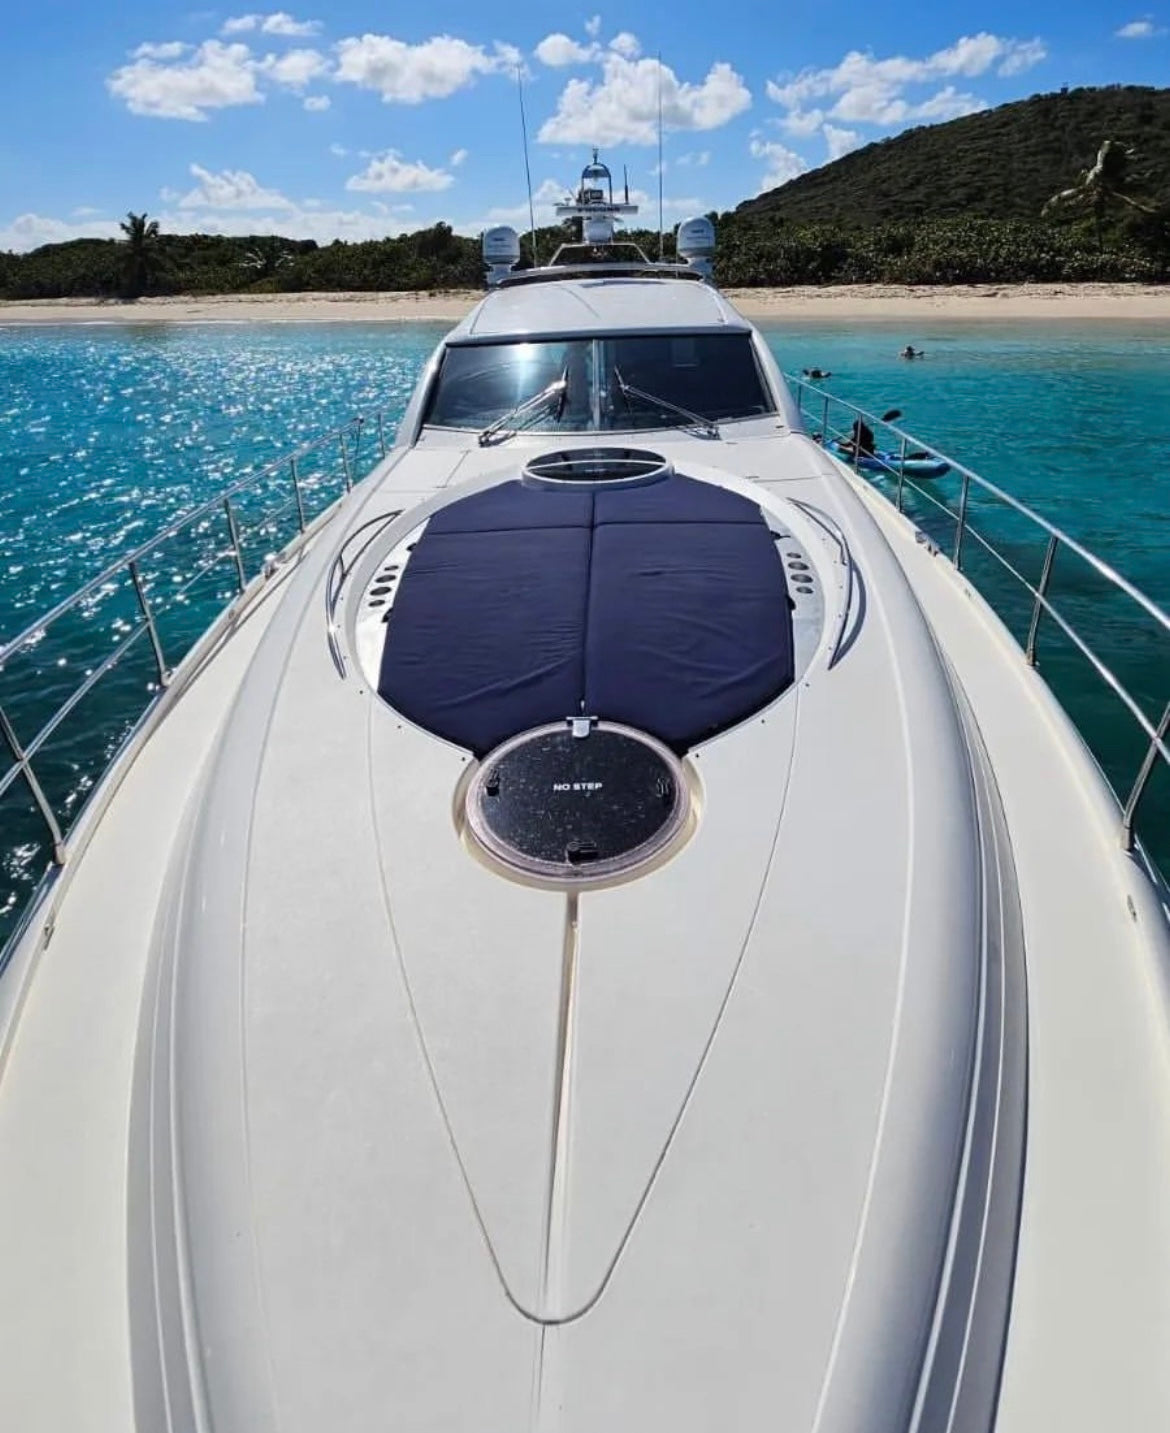 65' Fairline Yacht Charter